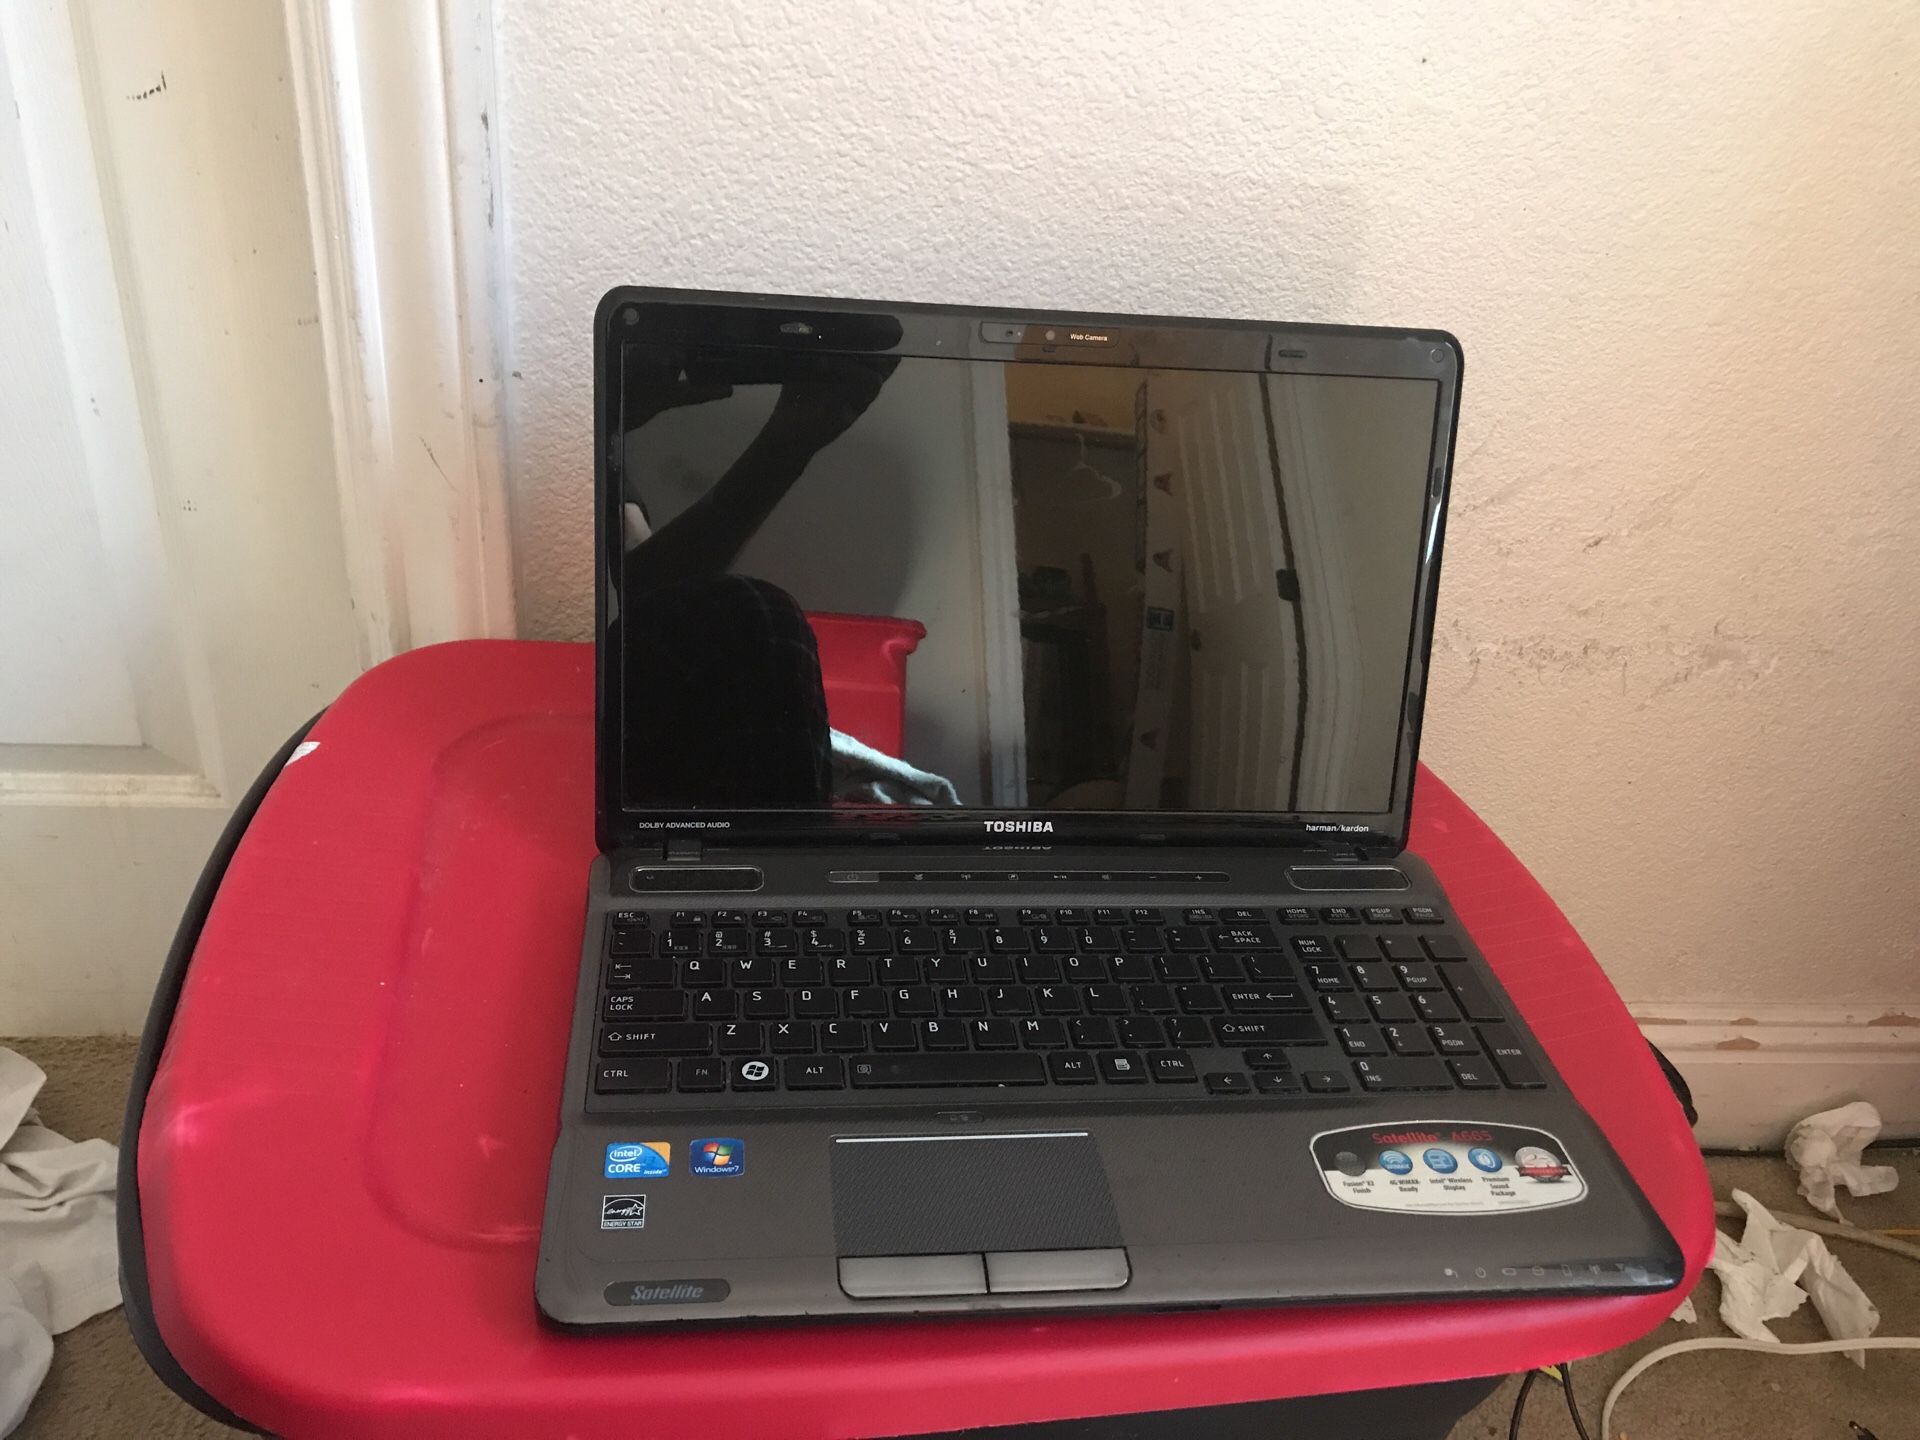 TOSHIBA Window 7 laptop